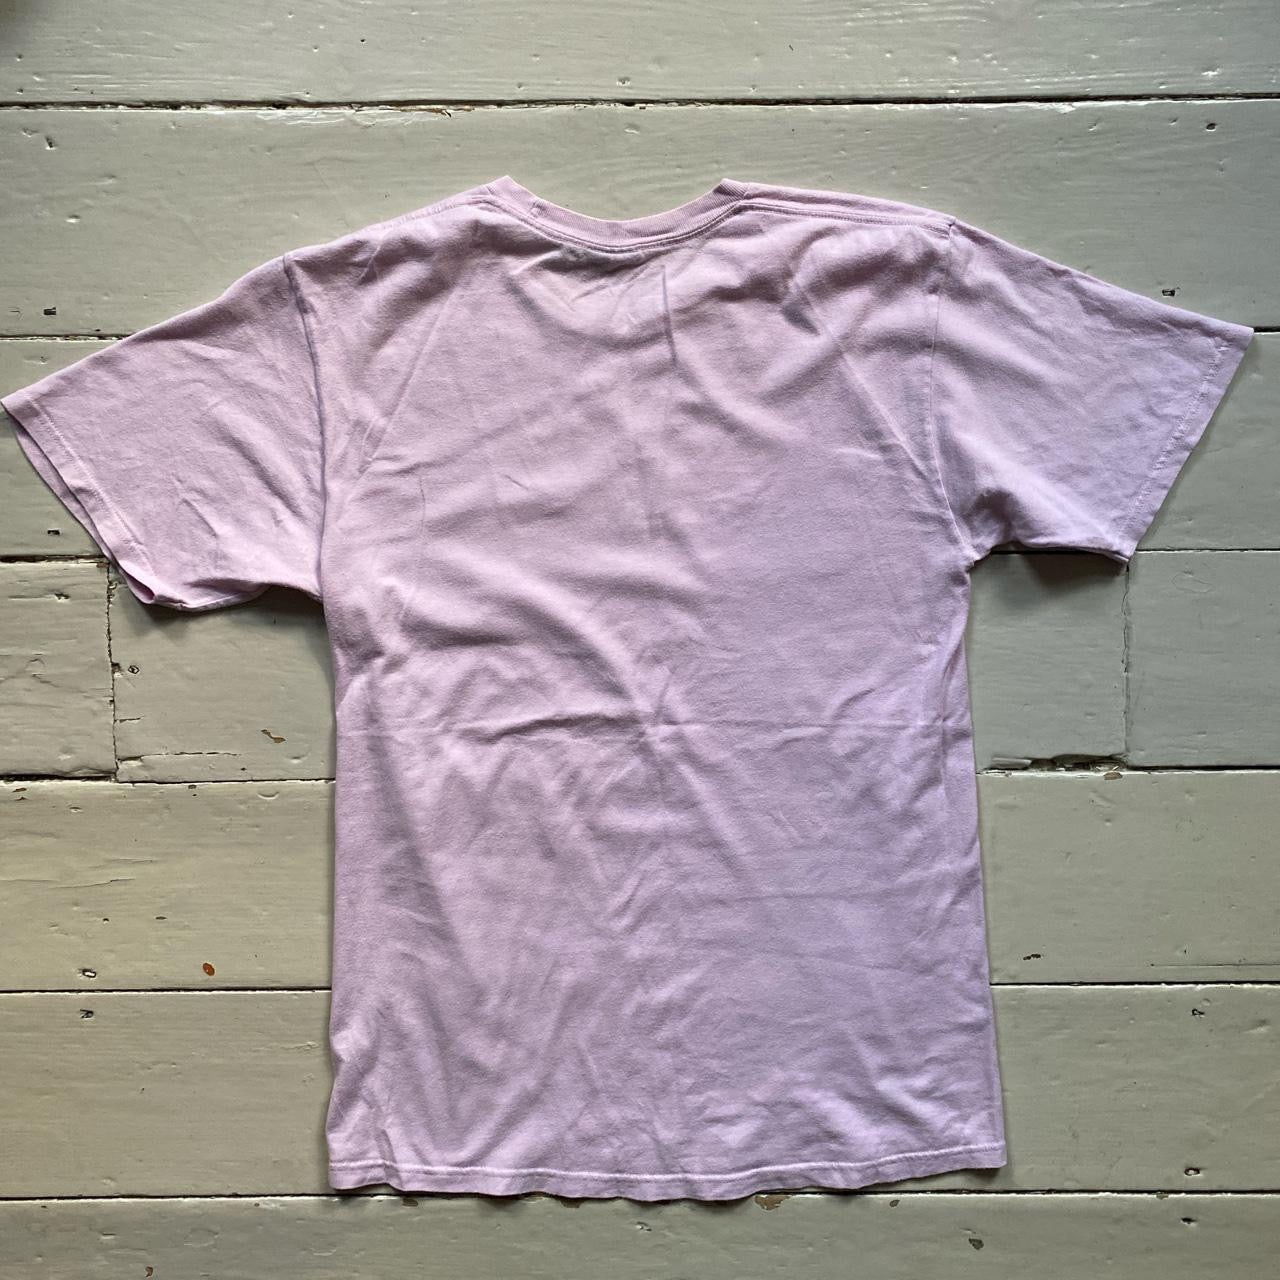 Stussy Pink and Green T Shirt (Medium)